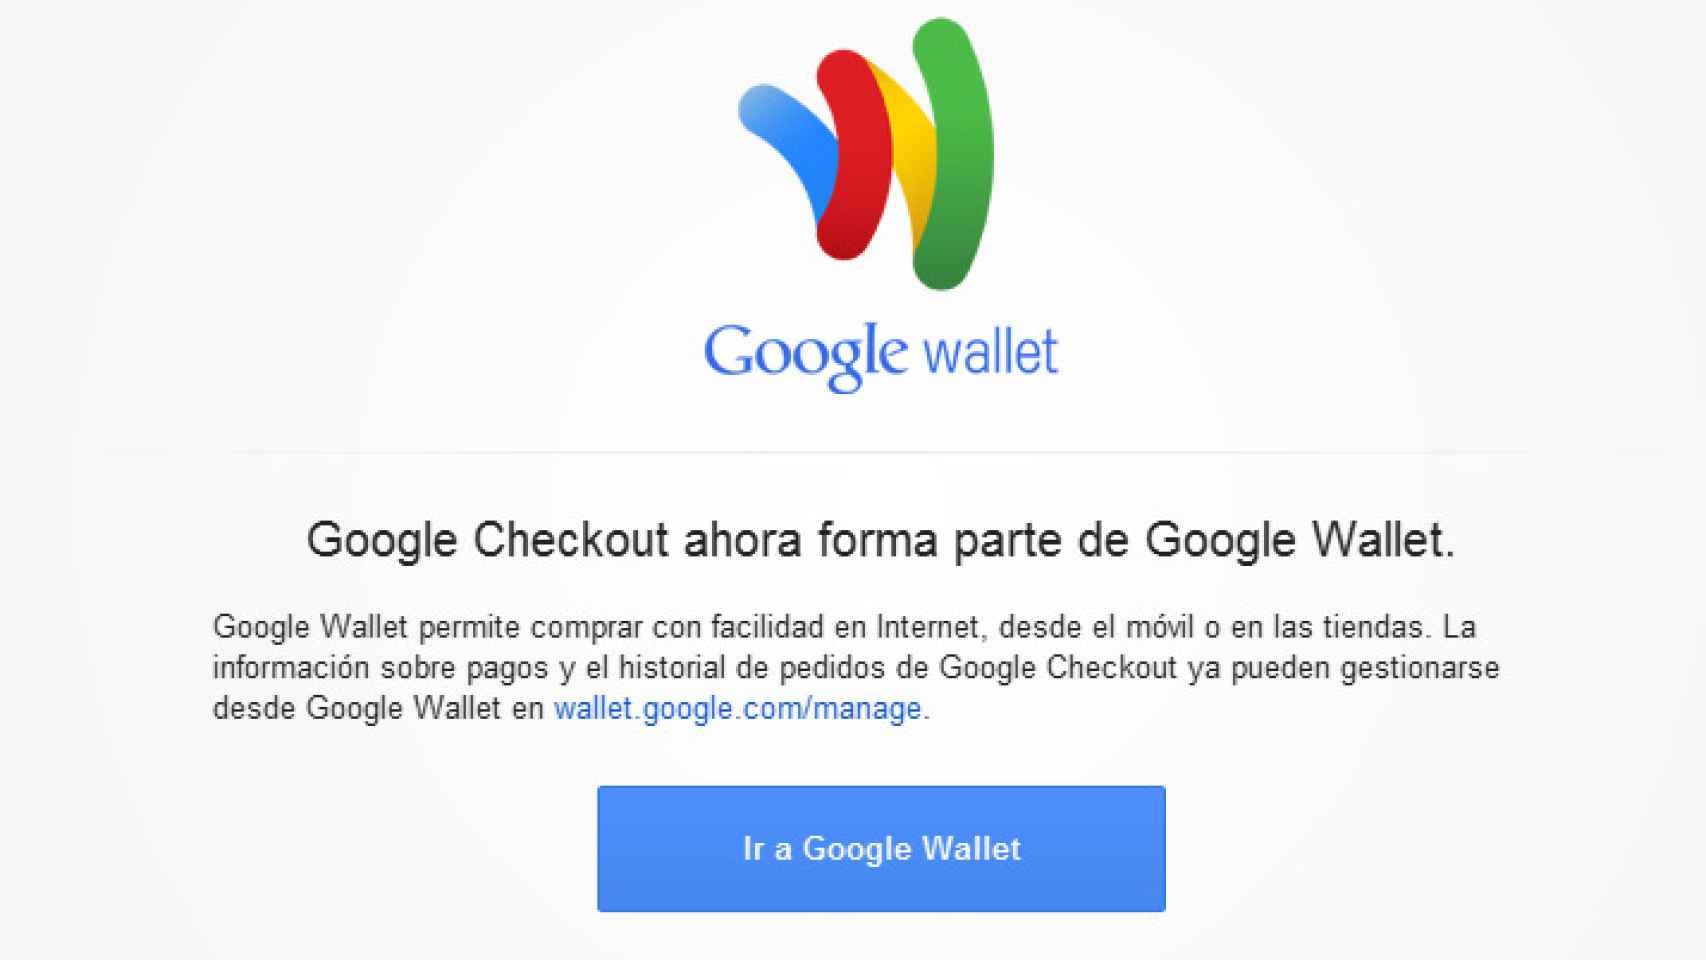 Google Wallet y Google checkout